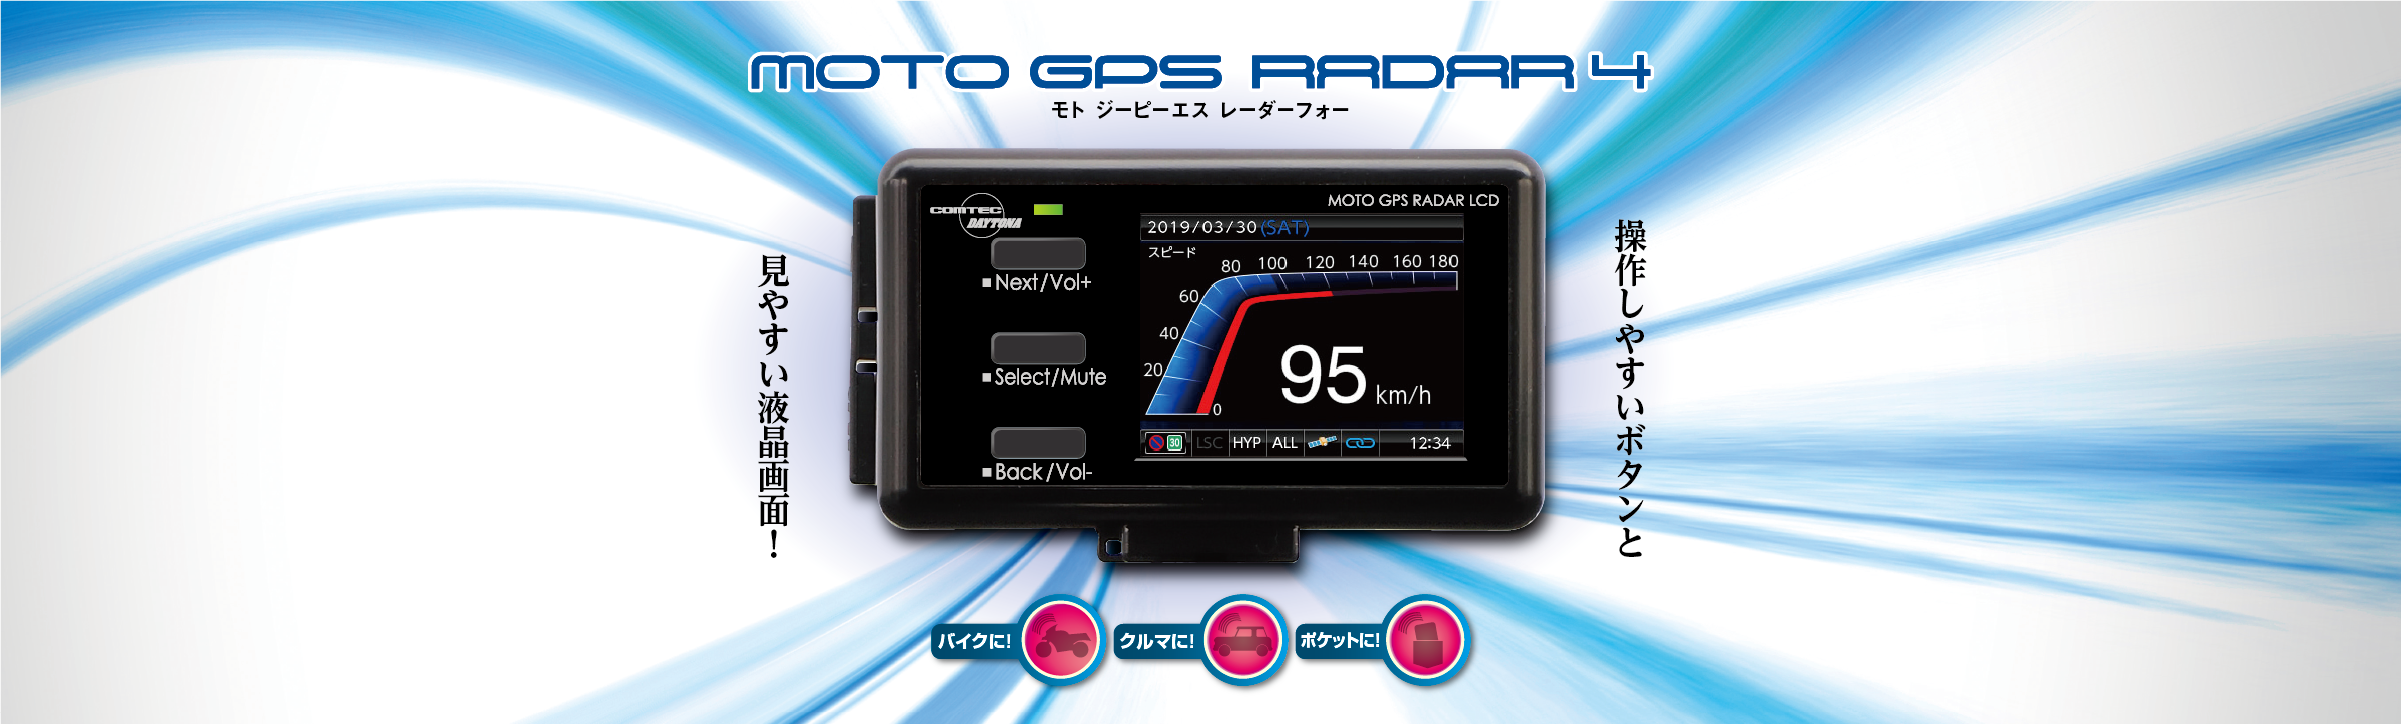 MOTO GPS RADAR 4